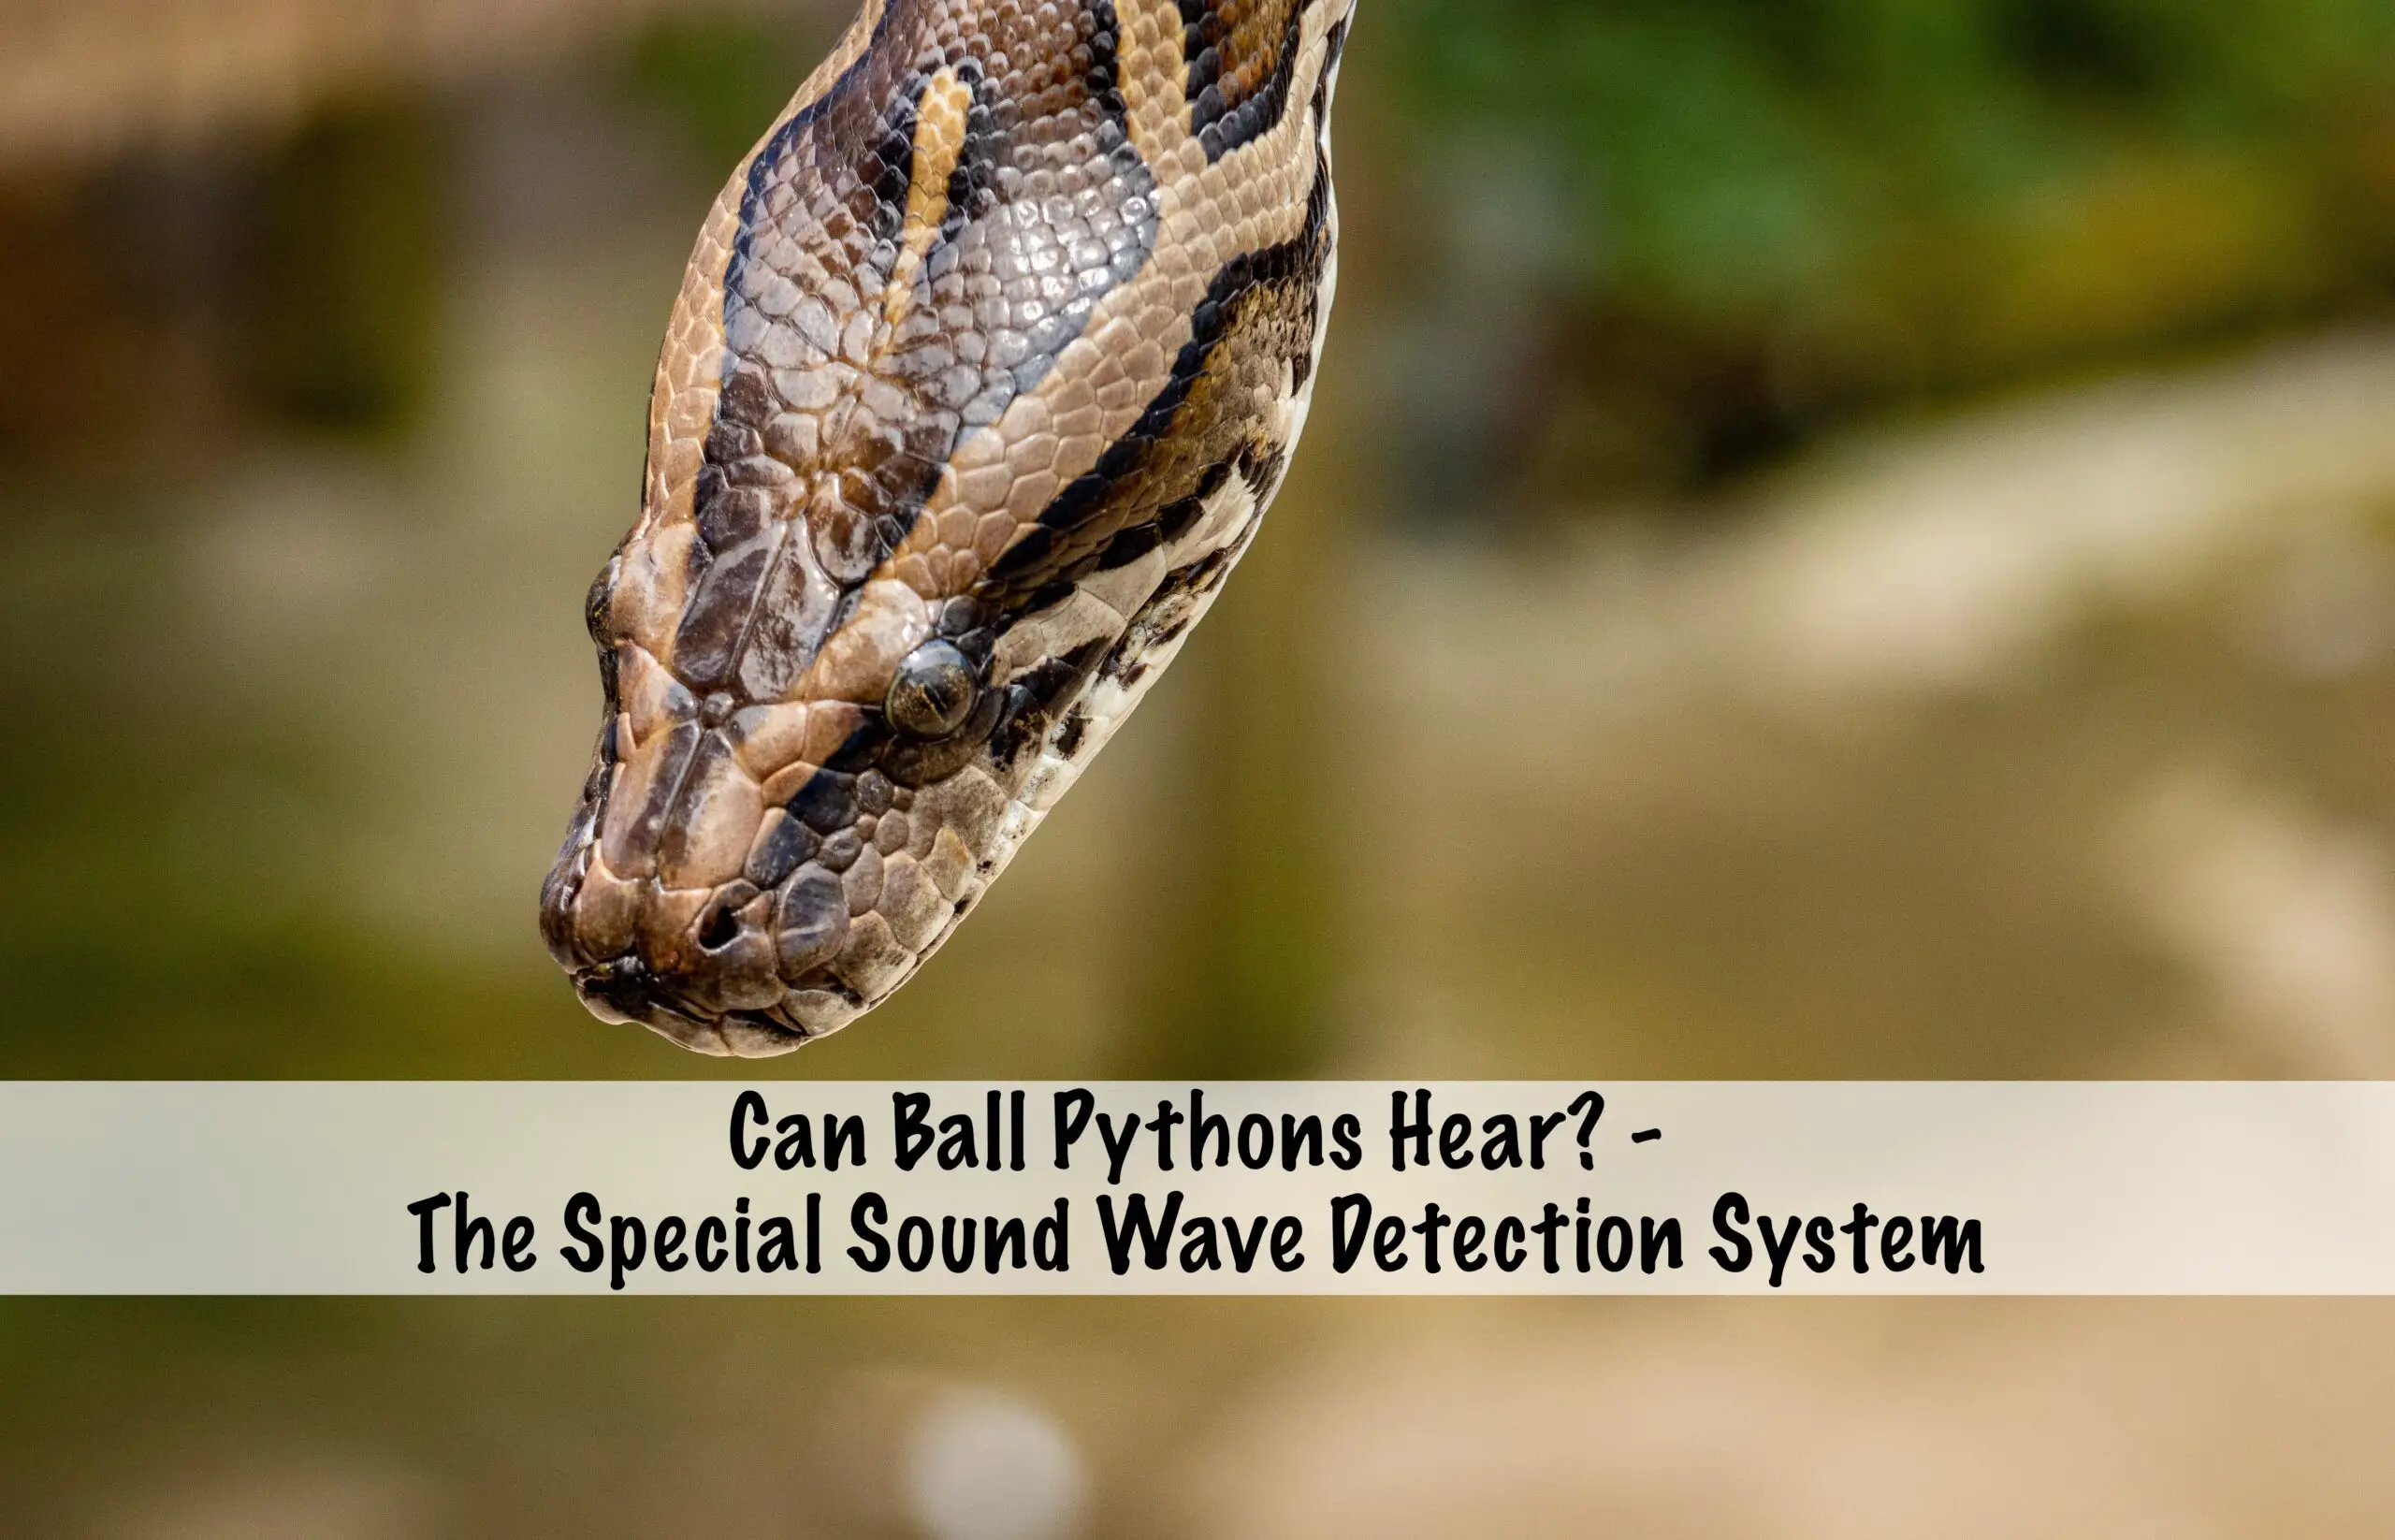 Can Ball Python Hear Sound?